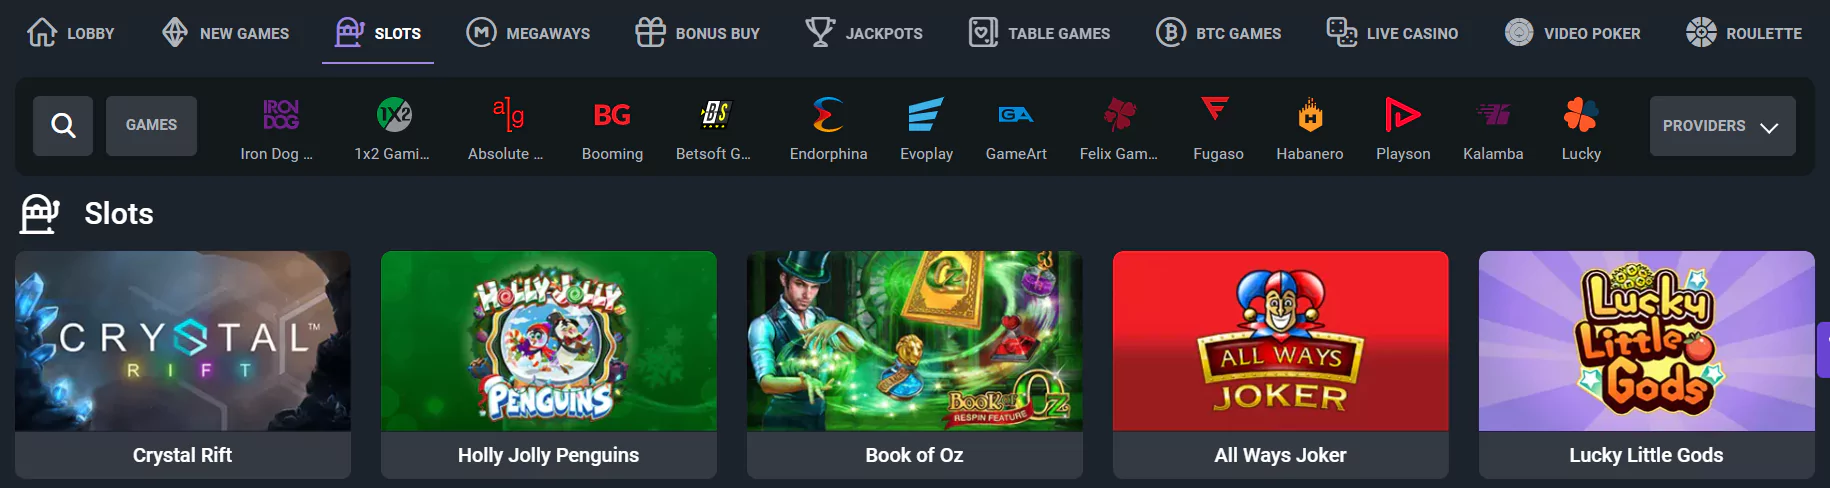 Screenshot of $10 Deposit Casino Online Games from official website